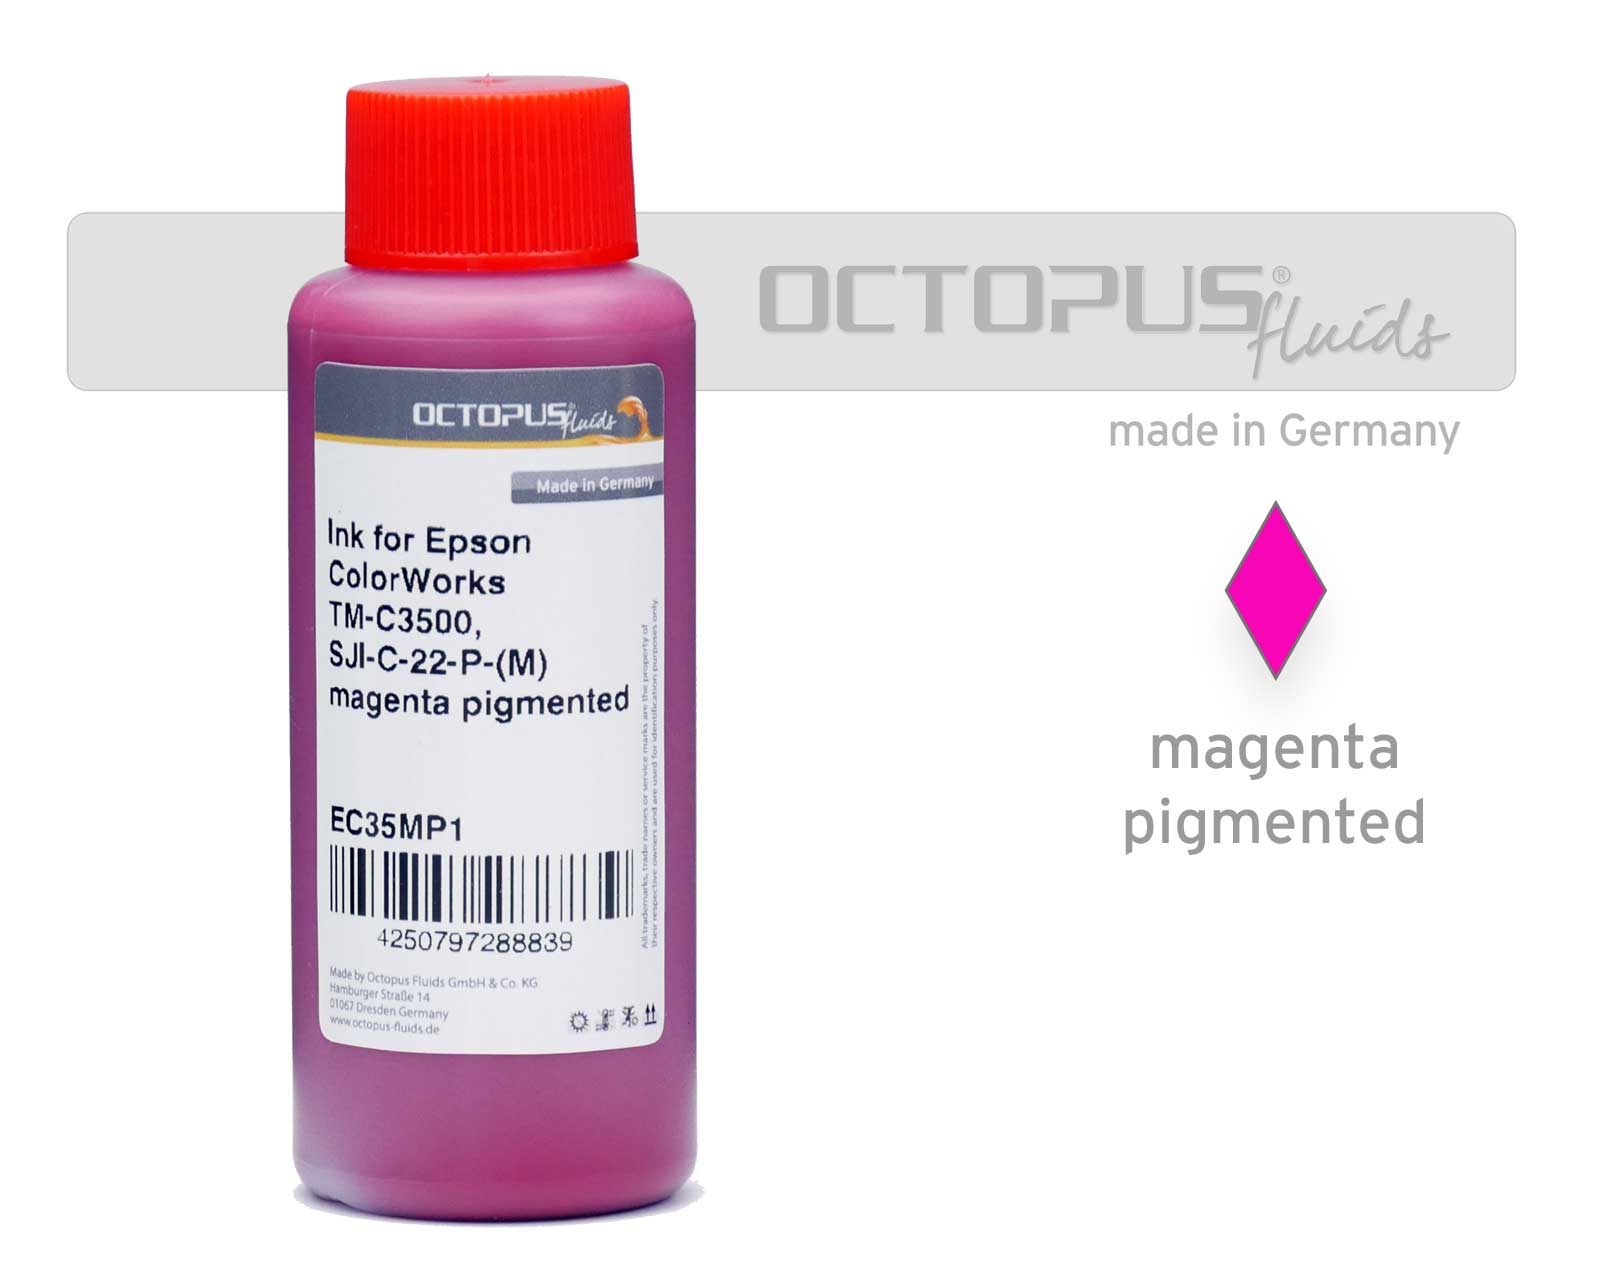 Refill ink for Epson ColorWorks TM-C3500, SJI-C-22-P-(M) magenta